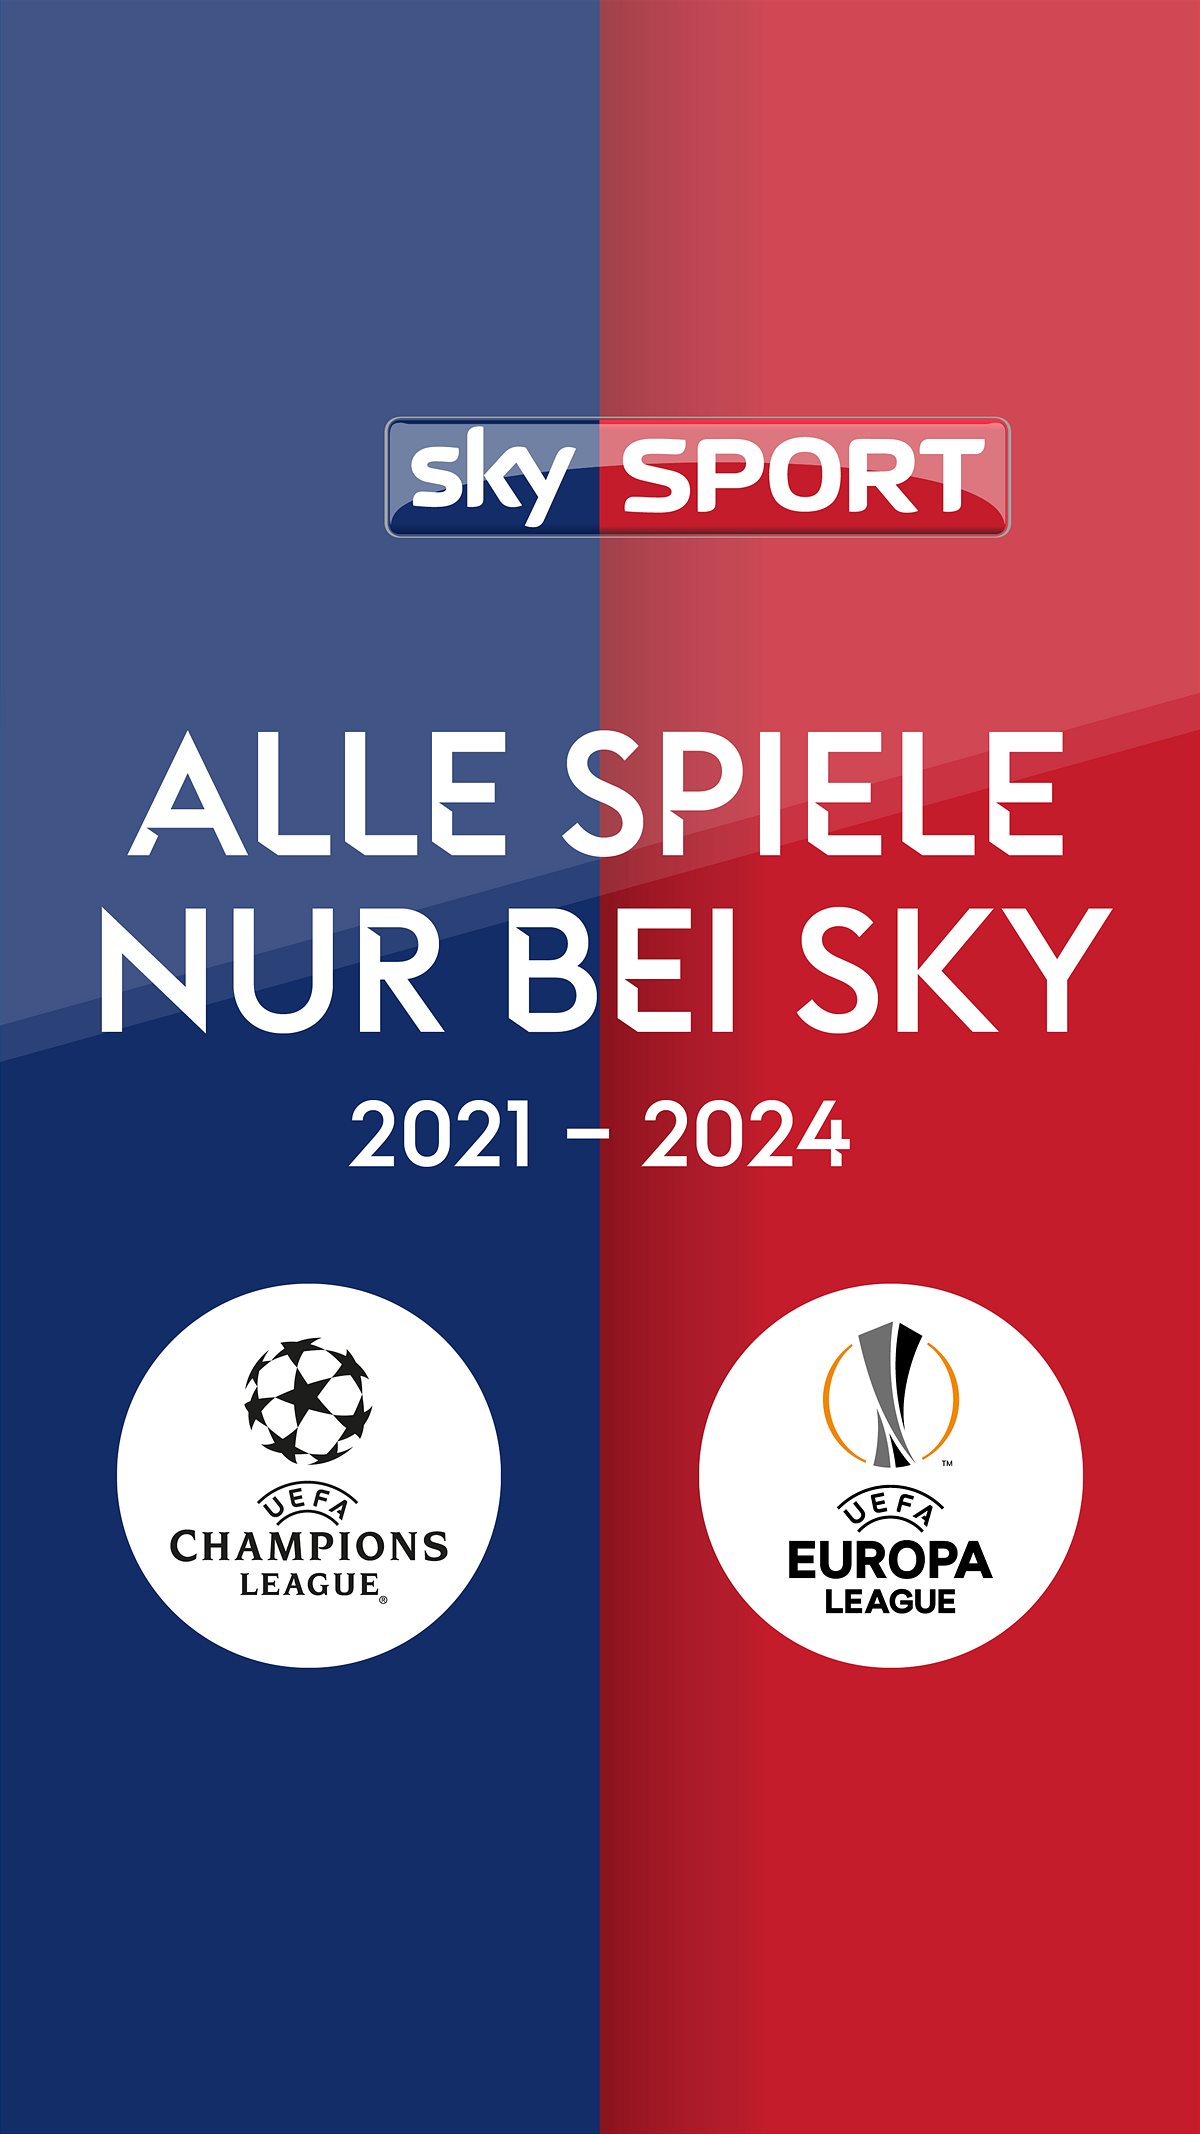 Sky UEFA